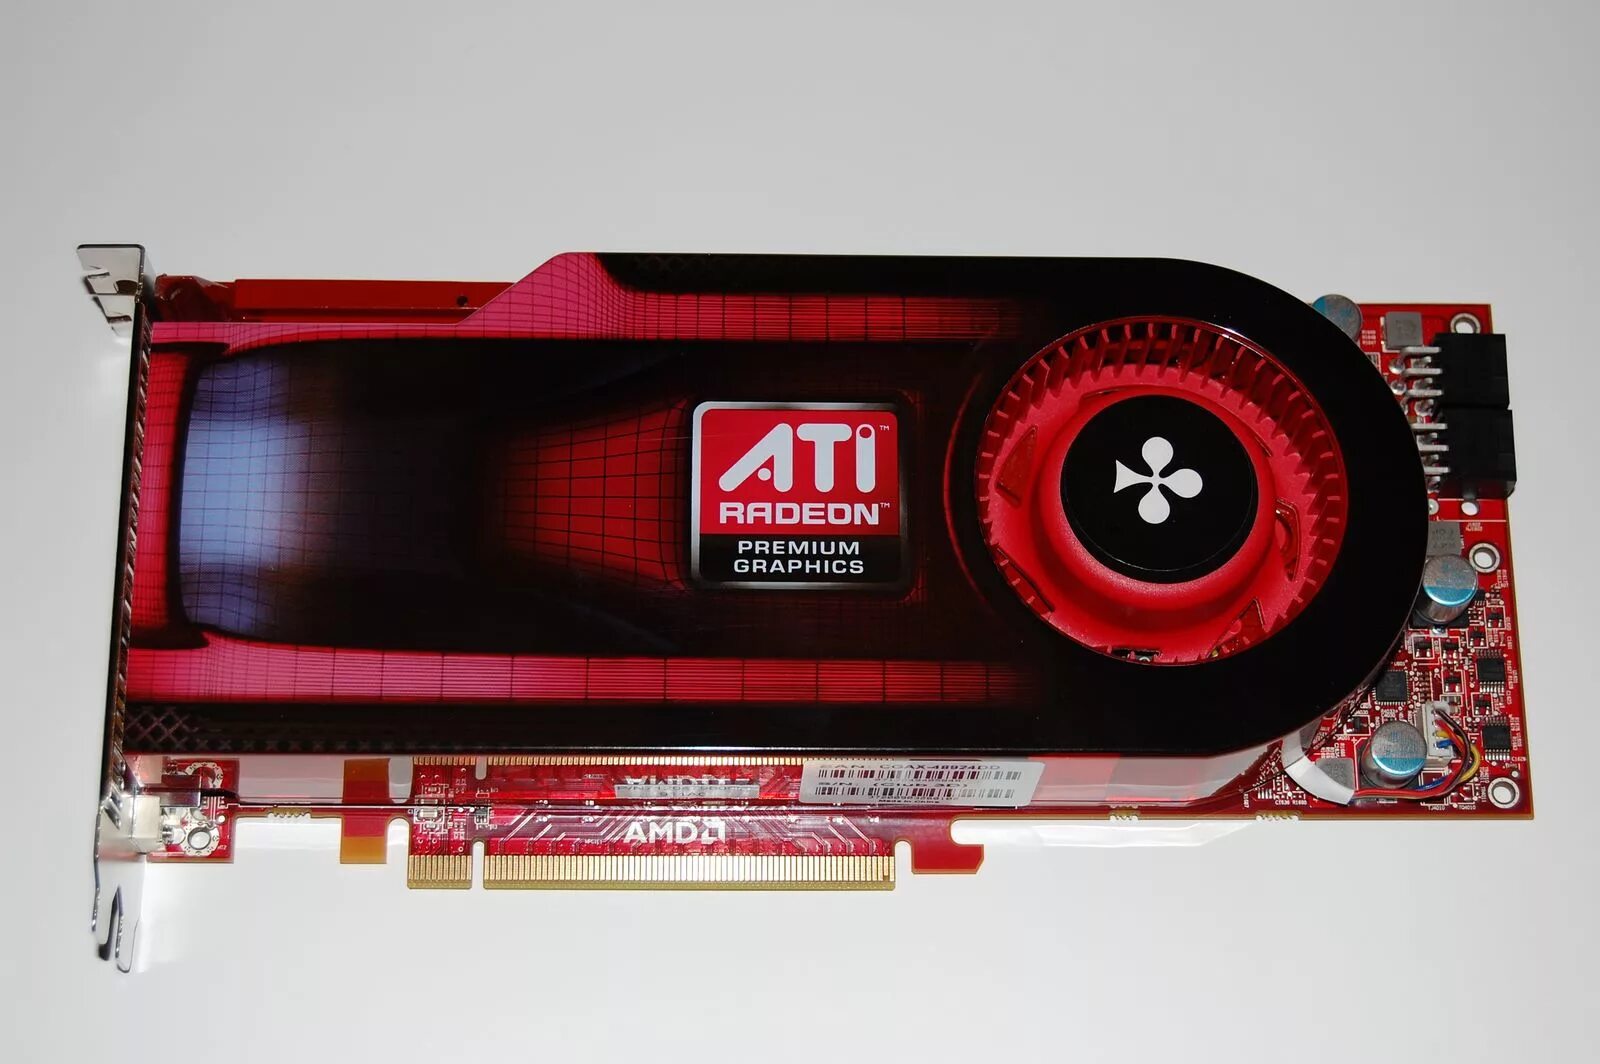 Ati radeon 1gb. Видеокарта AMD ATI Radeon hd4890.